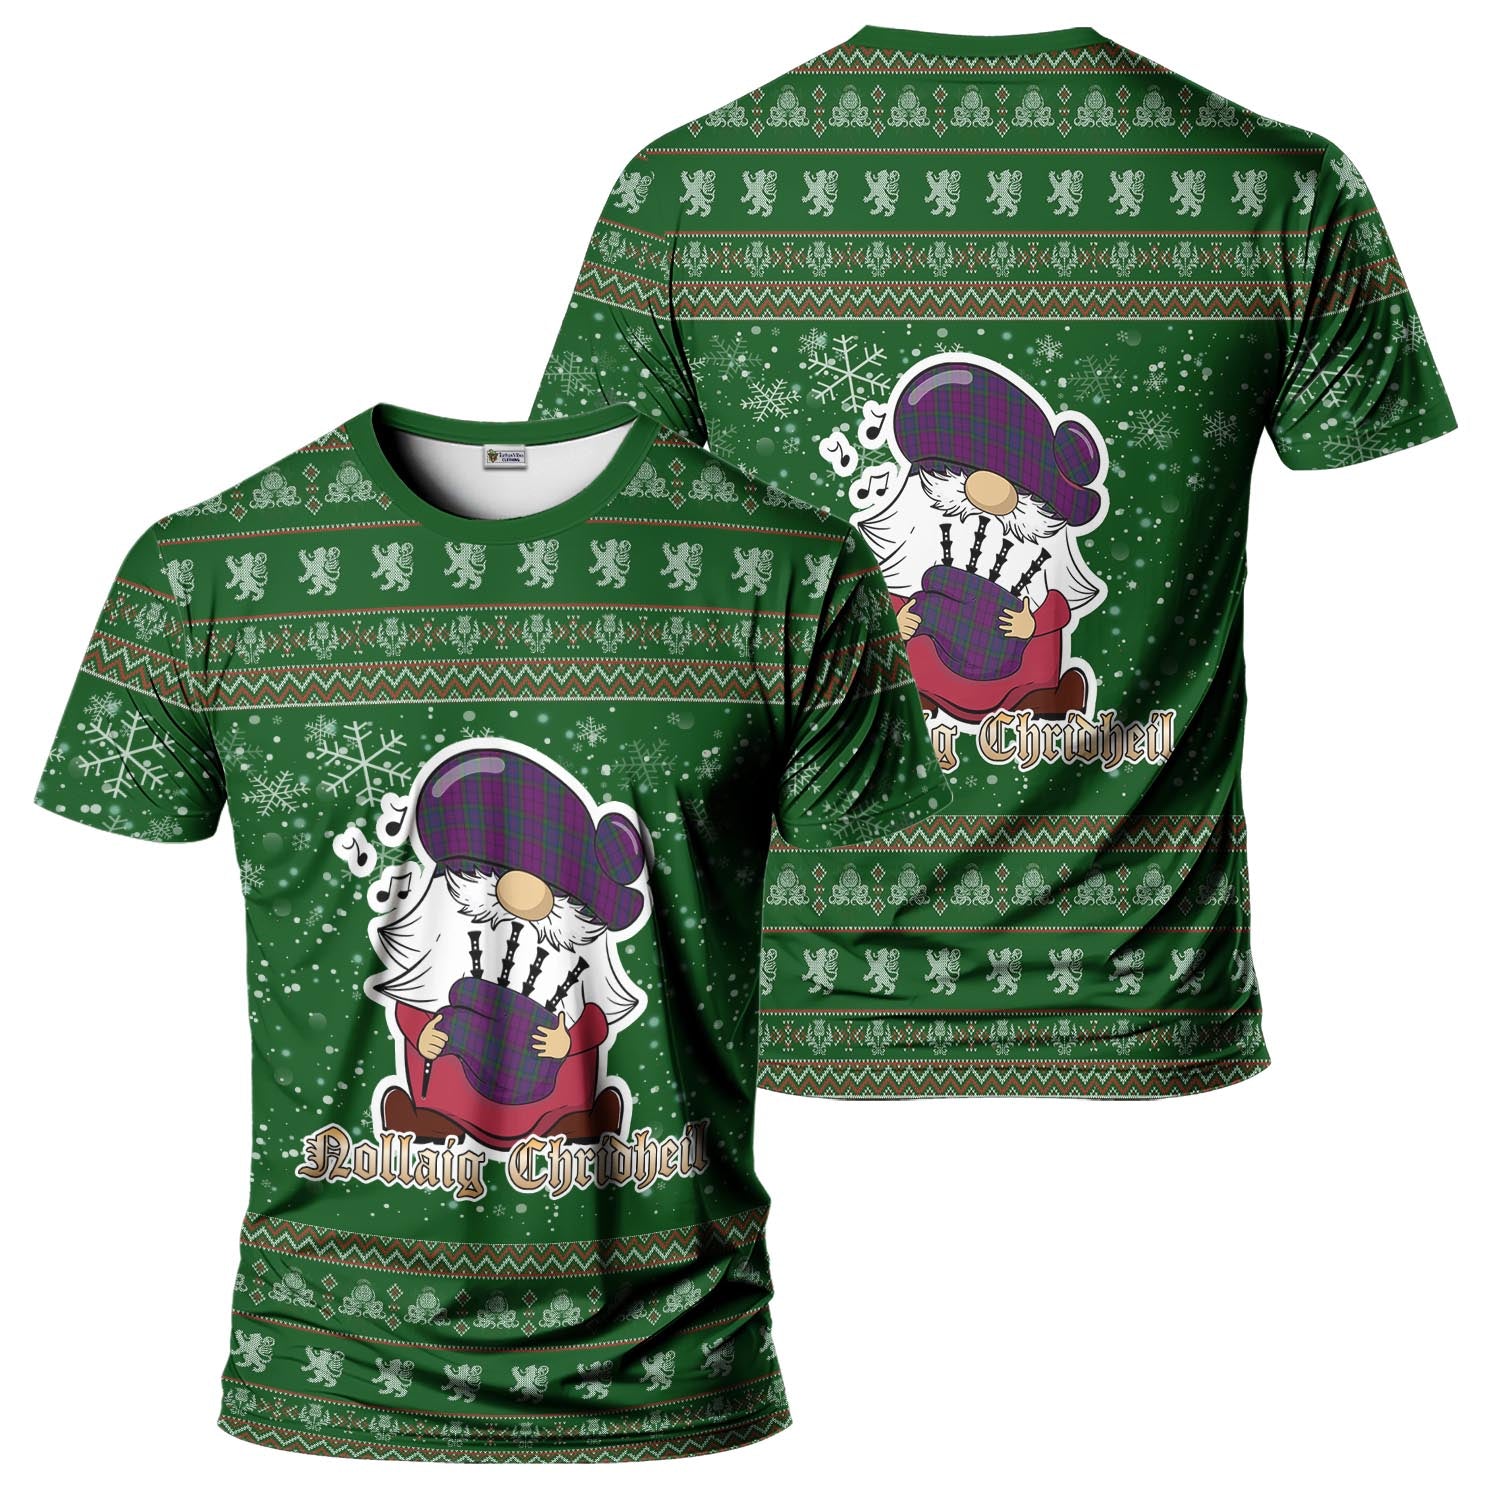 Wardlaw Clan Christmas Family T-Shirt with Funny Gnome Playing Bagpipes Men's Shirt Green - Tartanvibesclothing